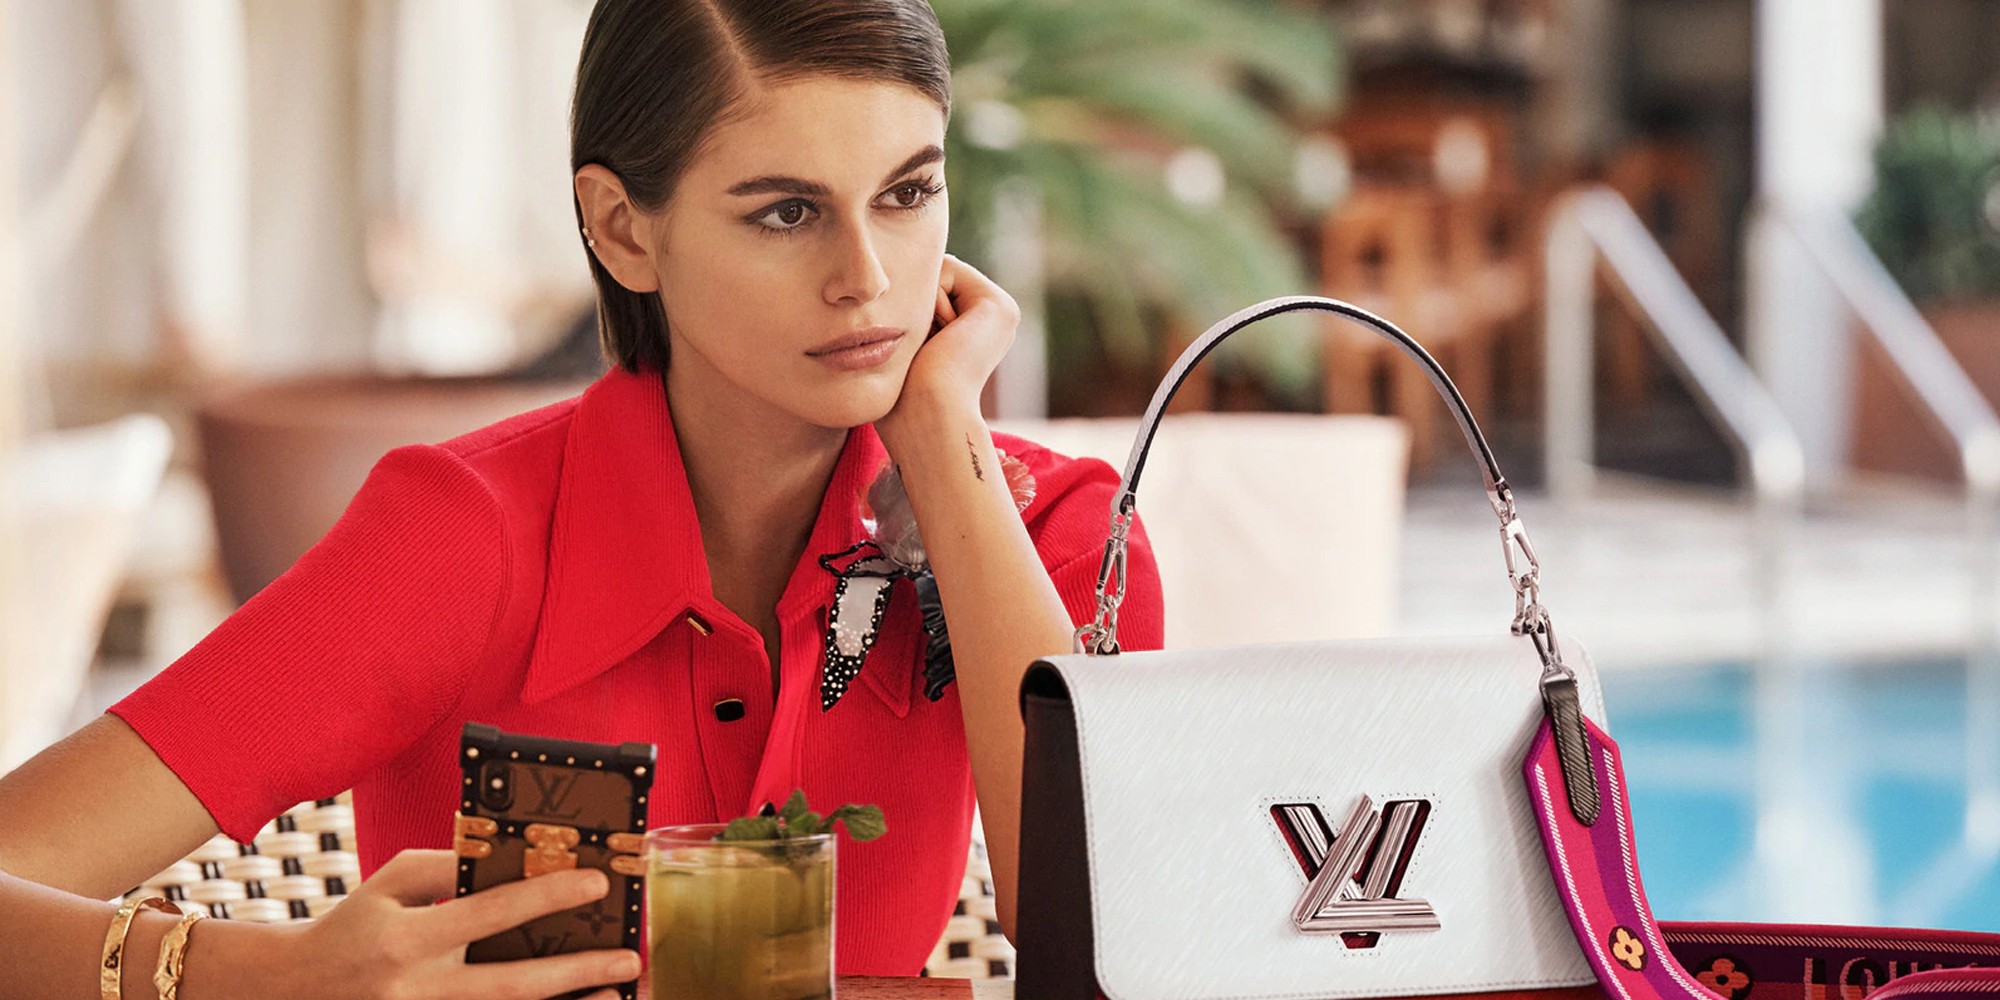 Louis Vuitton, Bags, Louis Vuitton Epi Passy Pm Red Bag